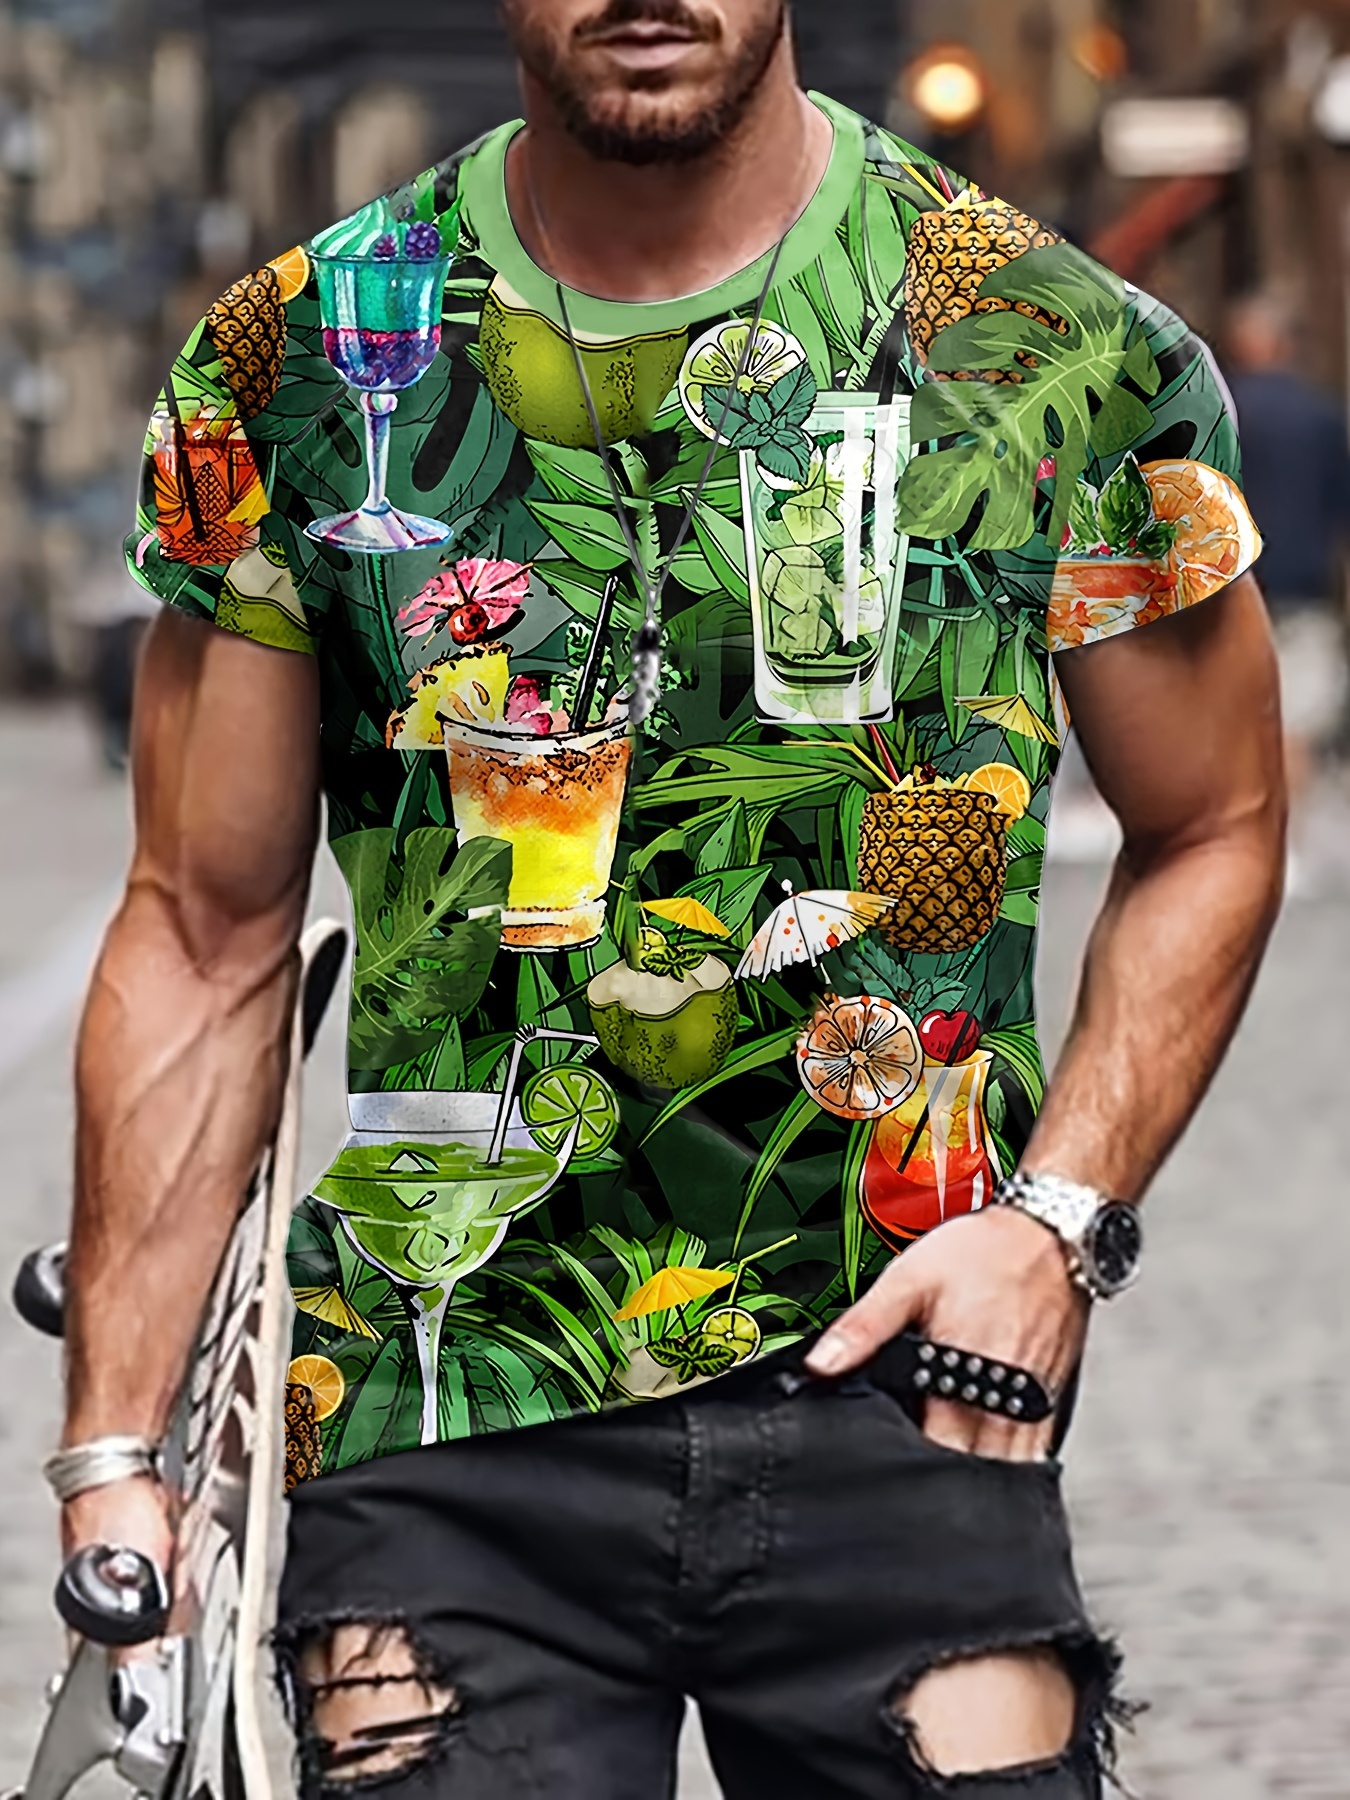 Lojito Neck T Summer Short Sleeve Shirt Casual Pocket 3D Mens Top